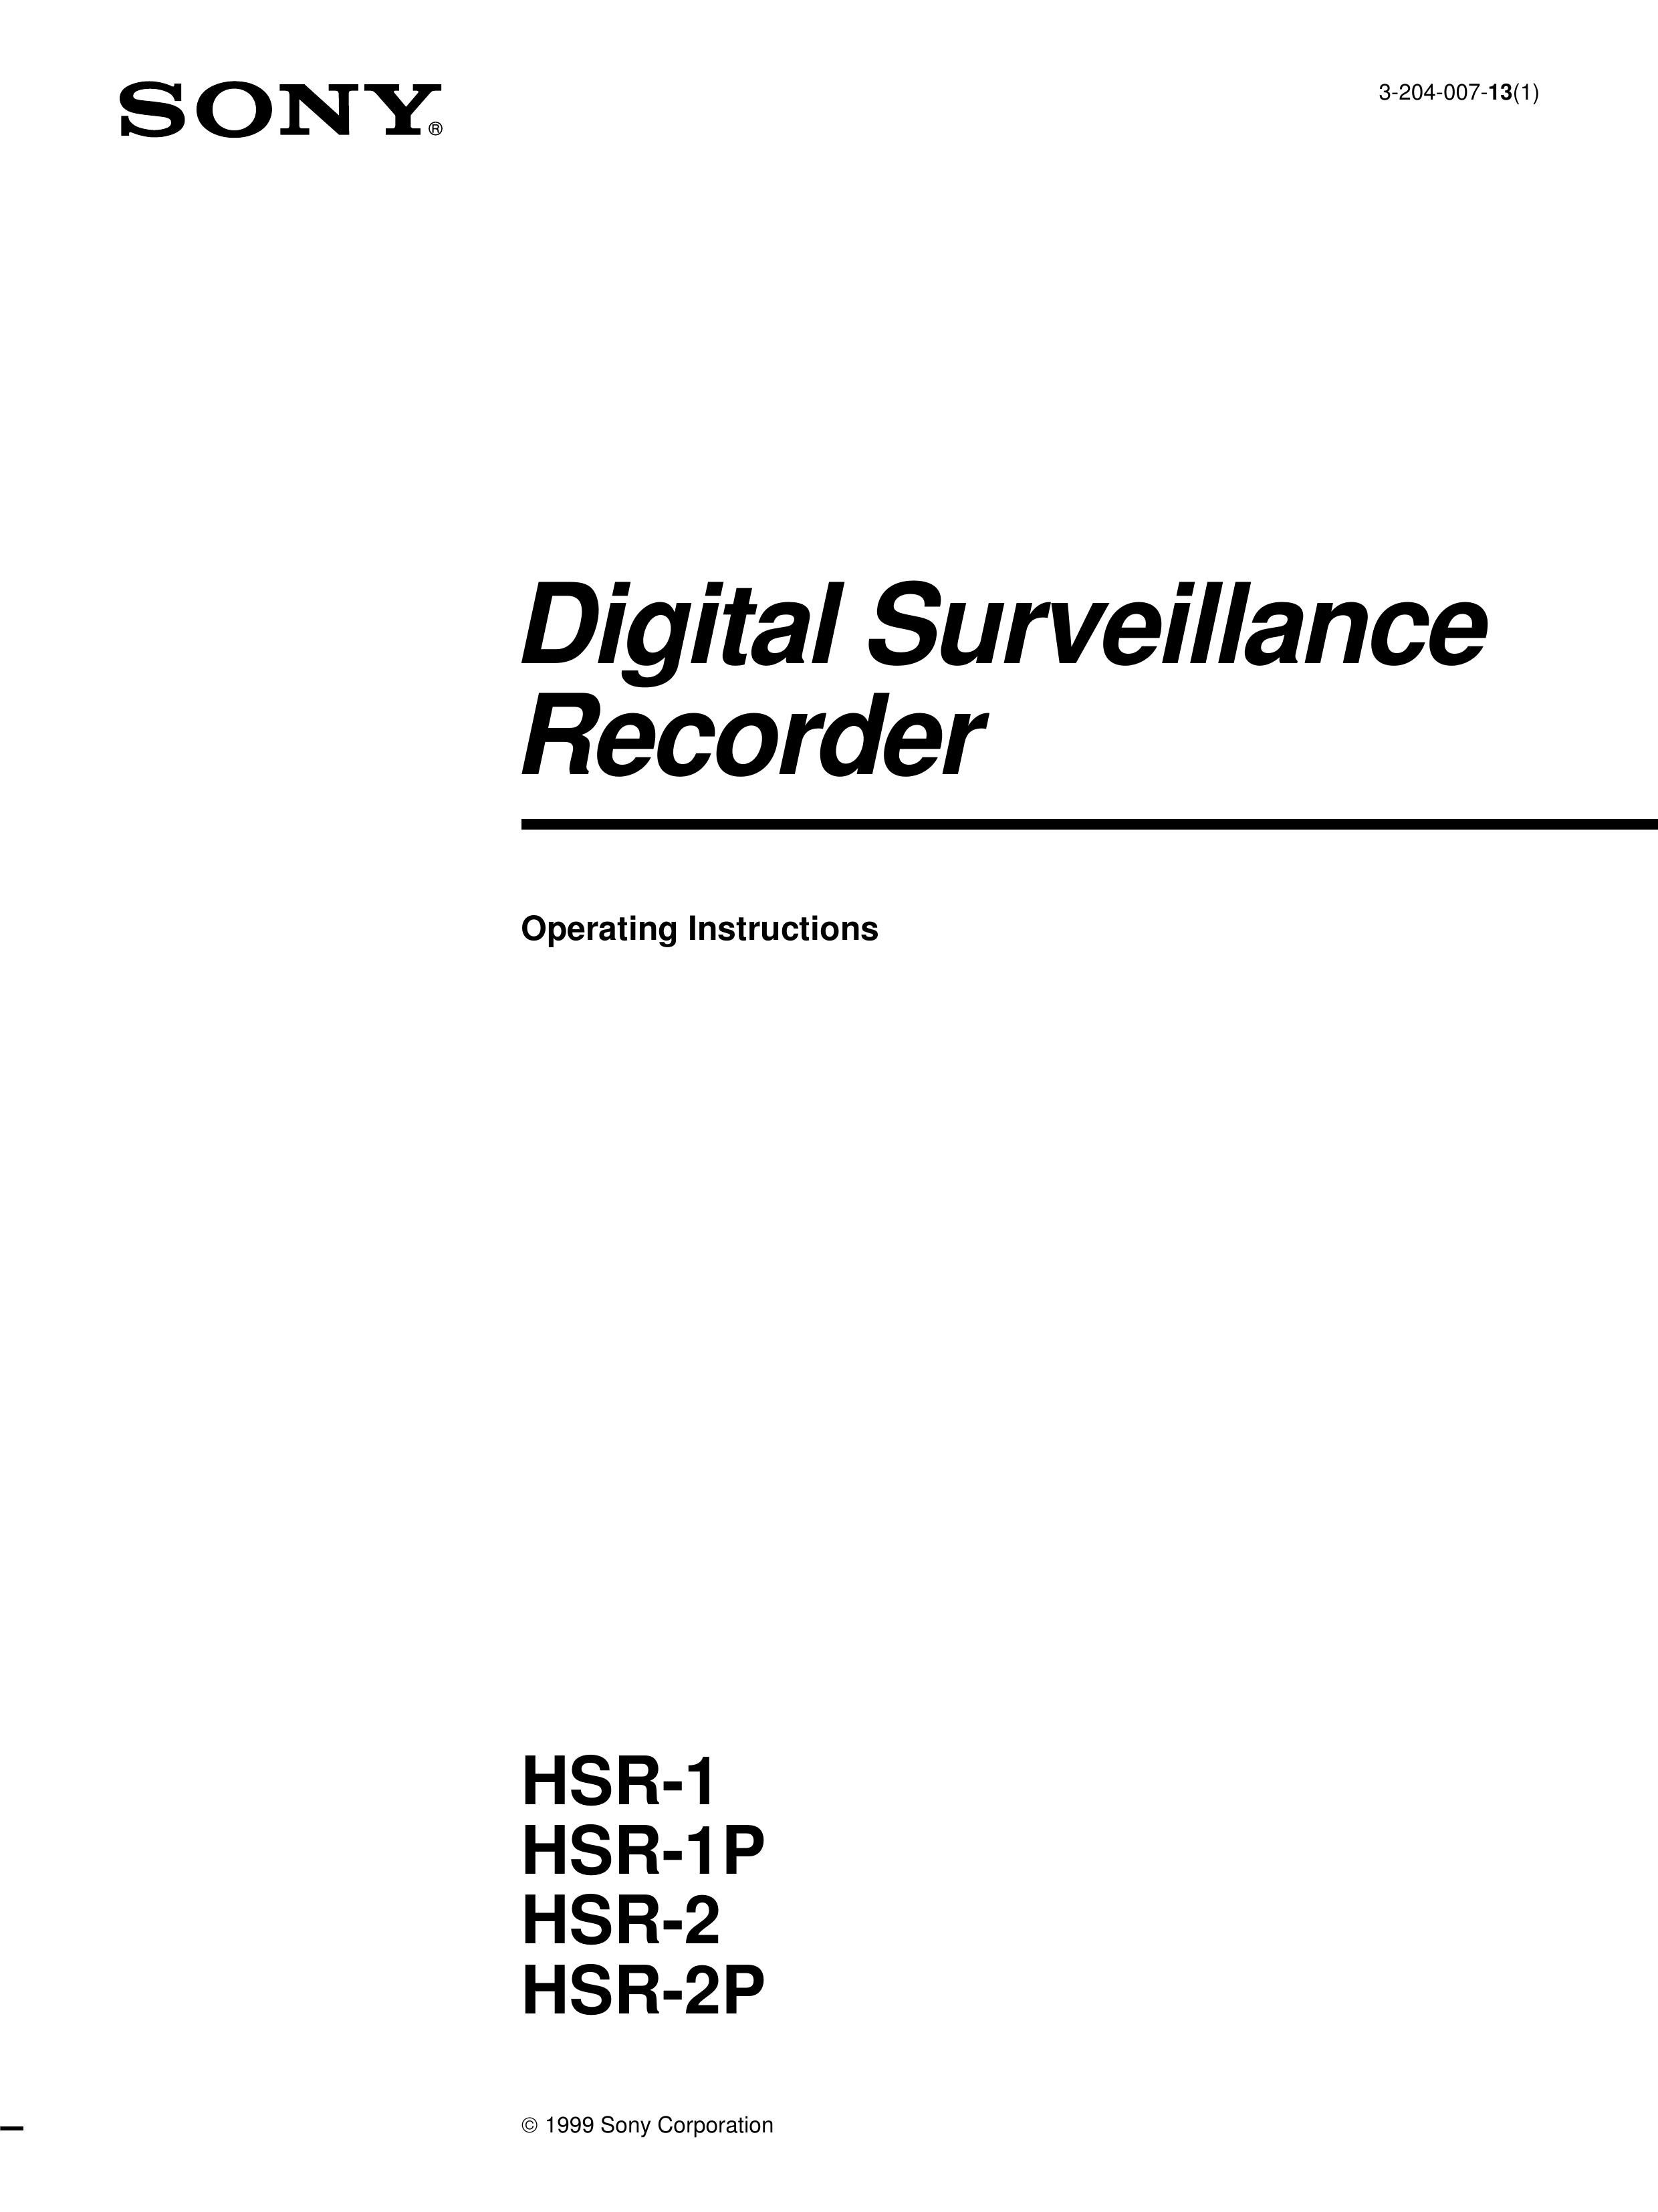 Sony HSR-2 Security Camera User Manual